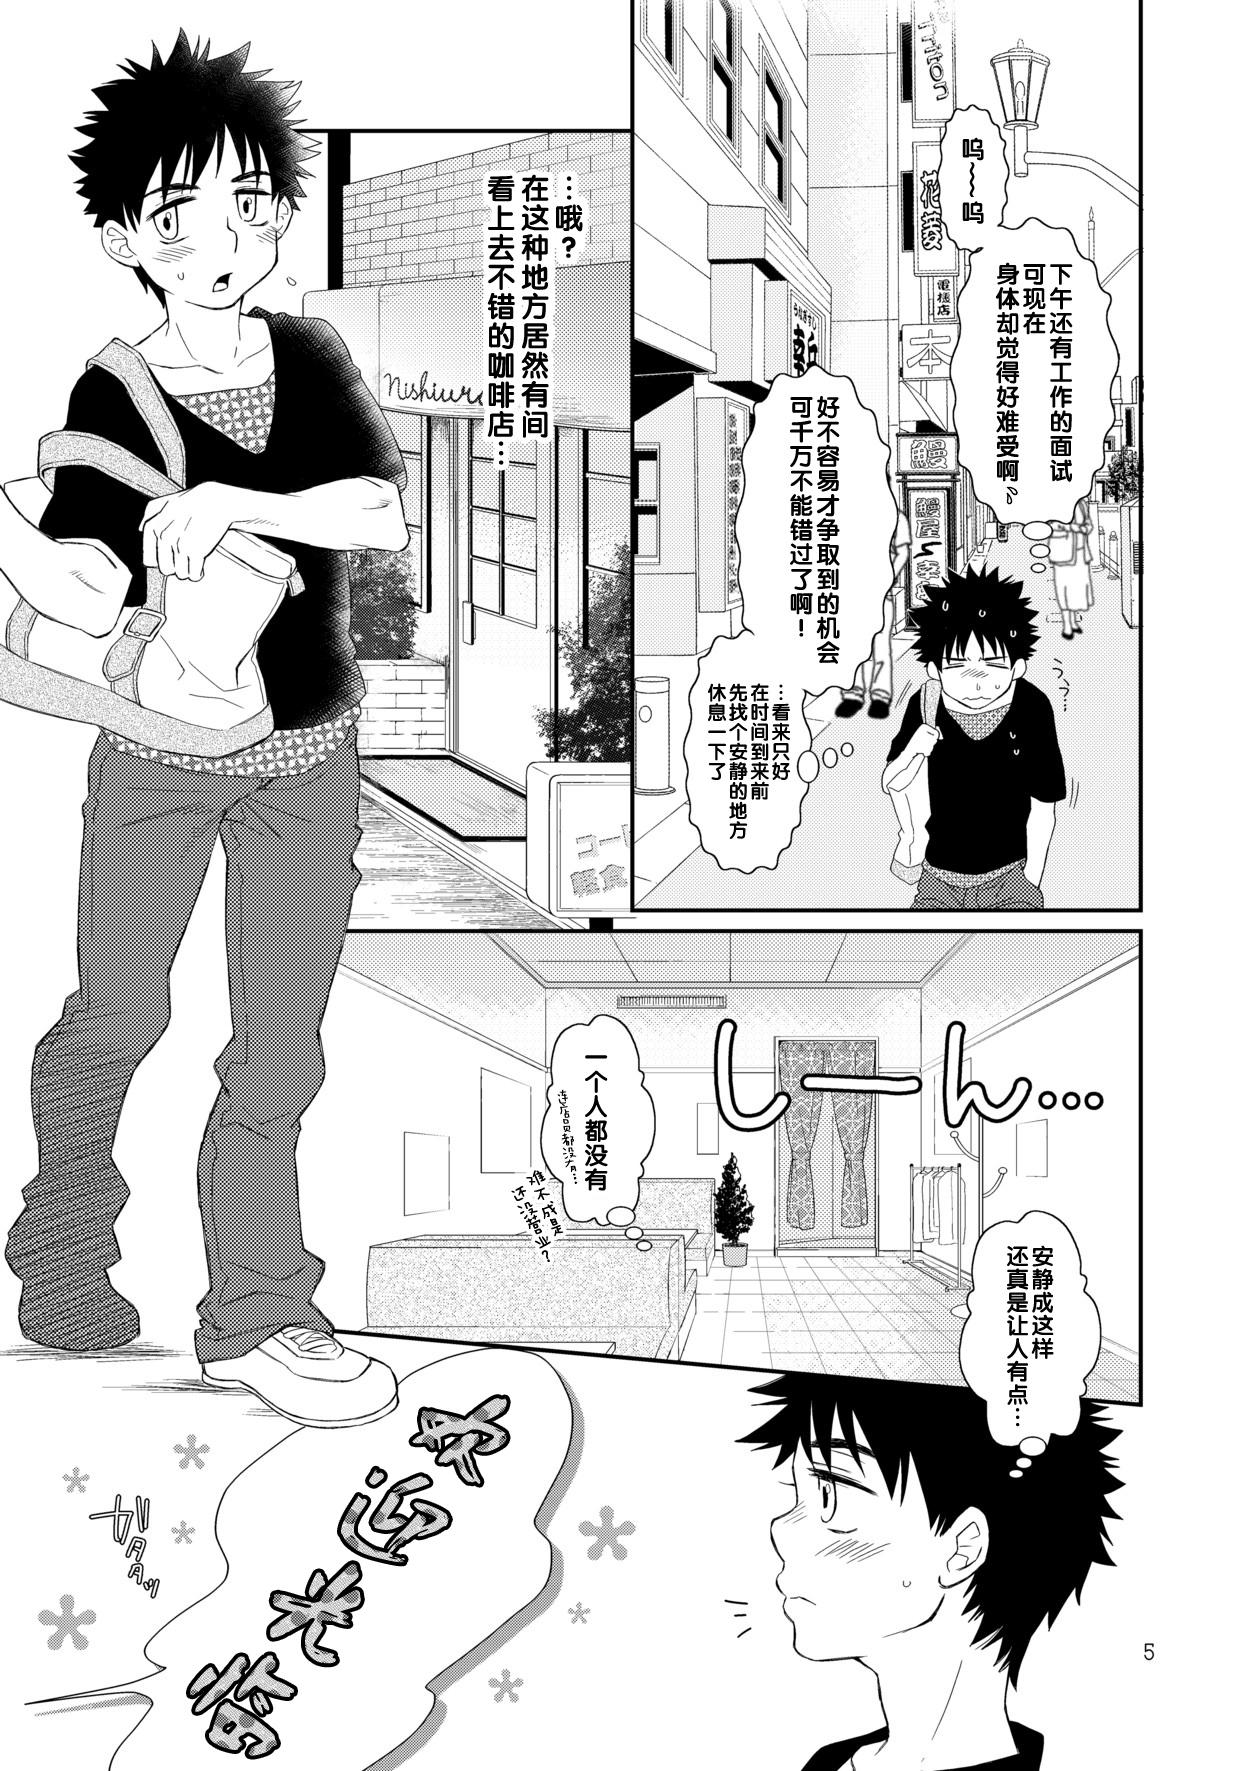 College Tsuyudaku Fight! 9 - Ookiku furikabutte | big windup Hot Girl - Page 5